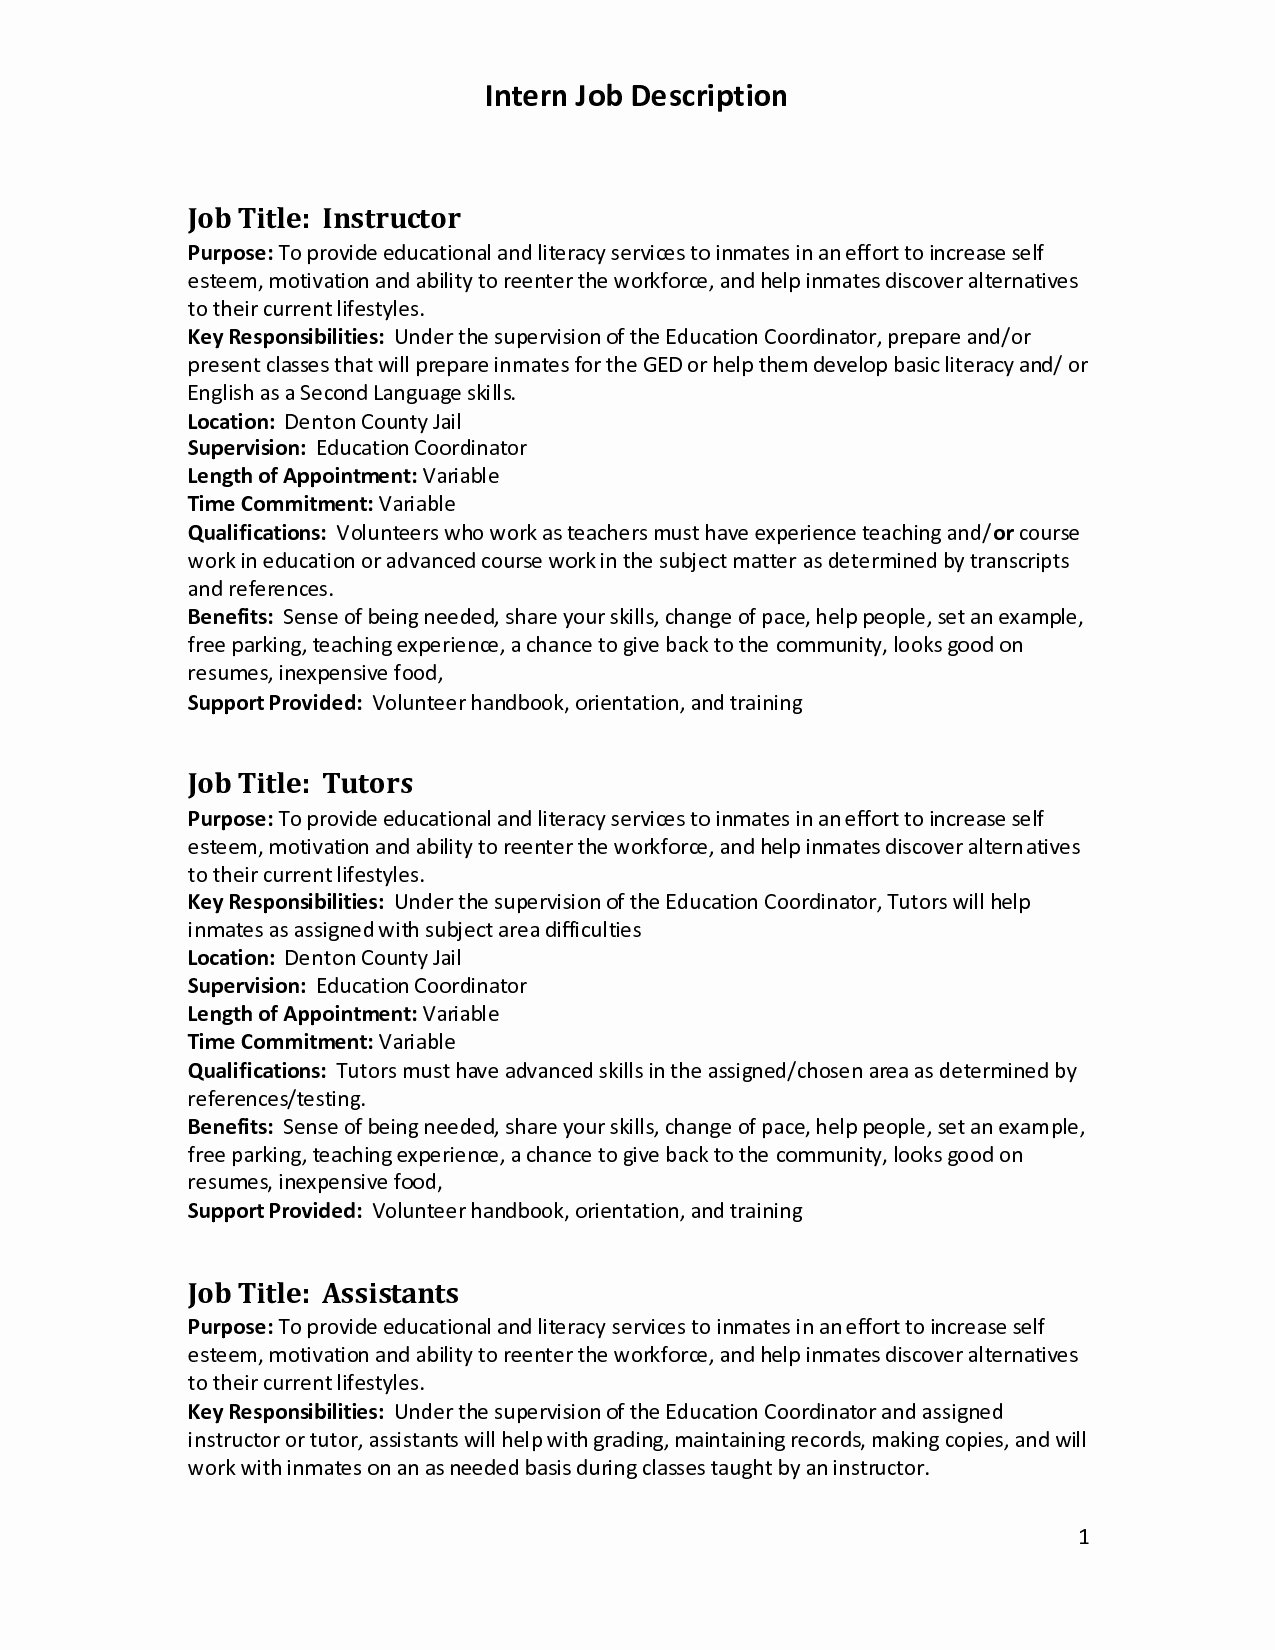 Resume Summary for Job Change